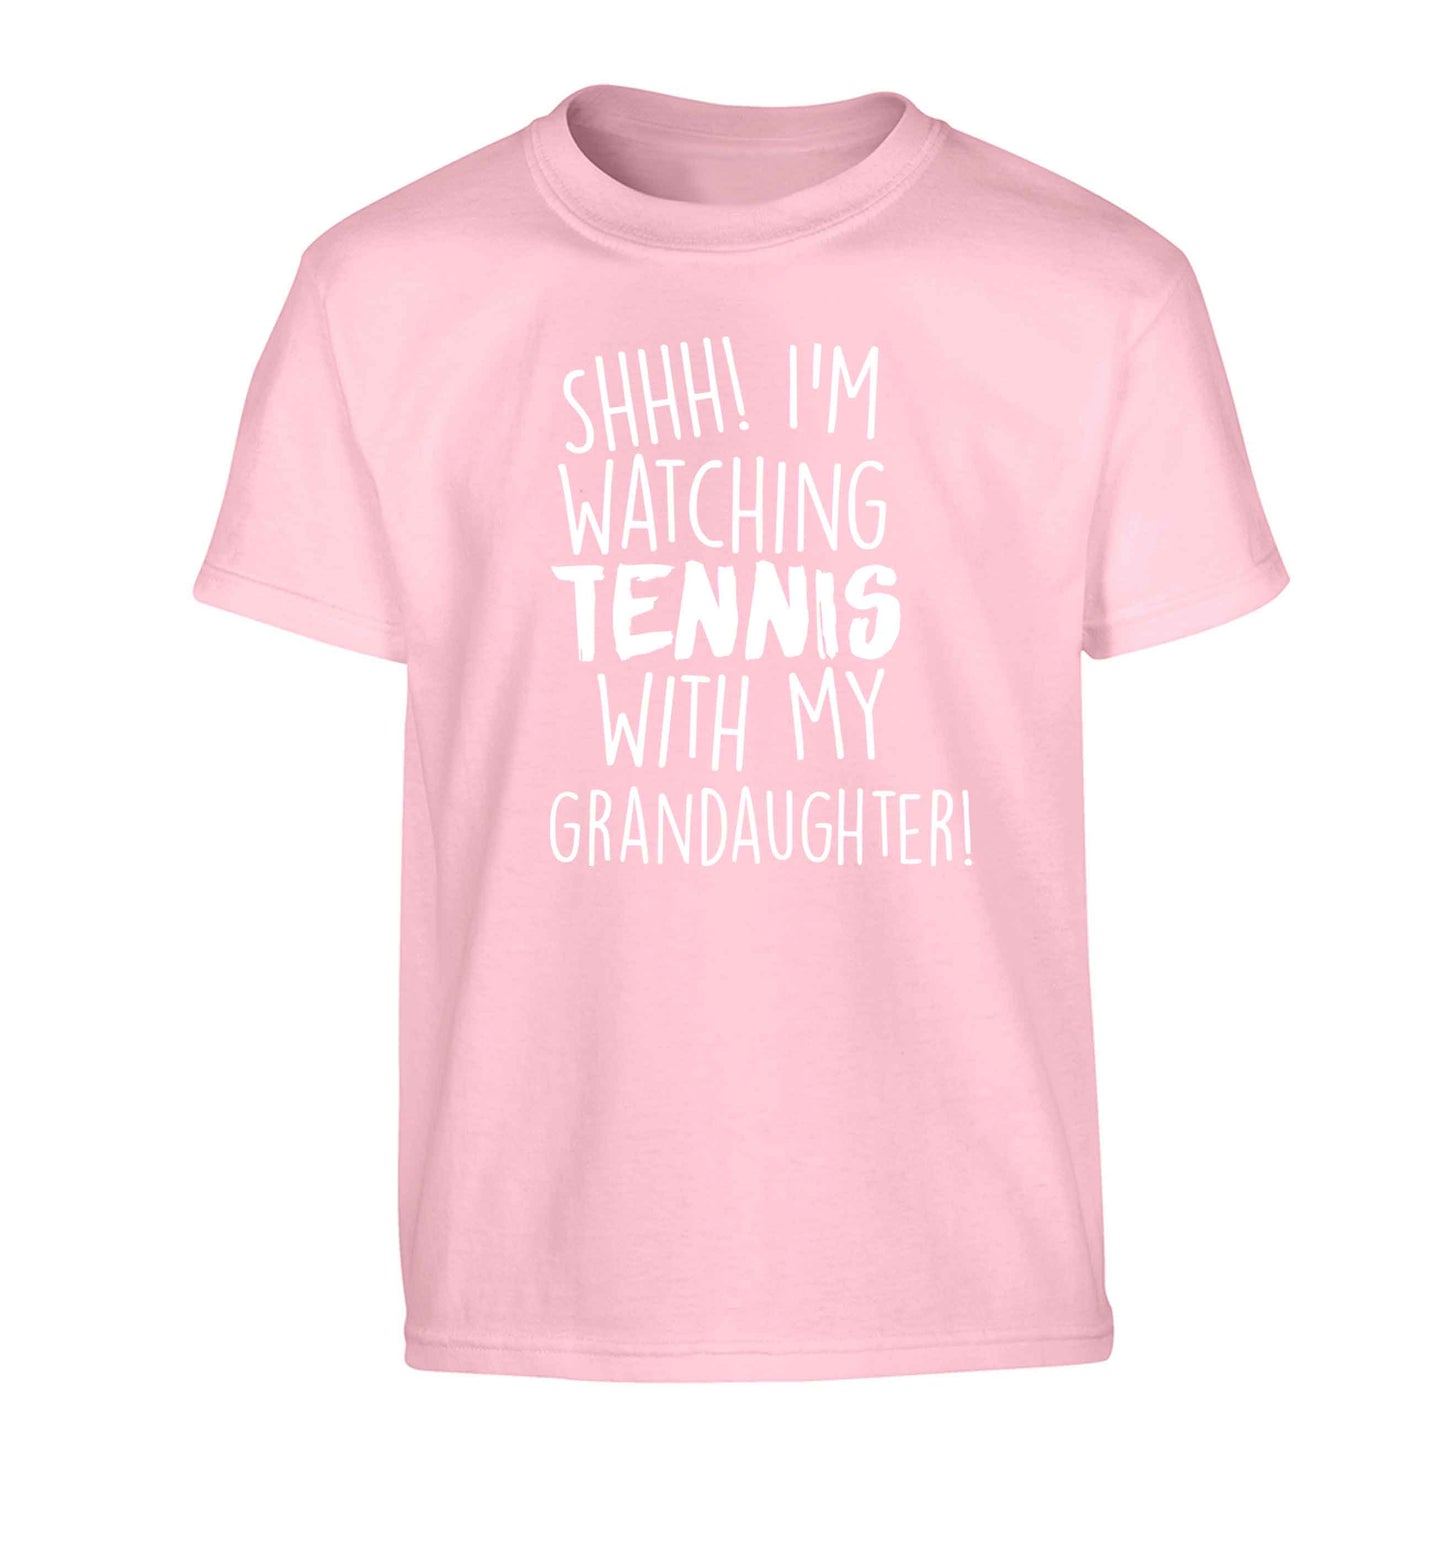 Shh! I'm watching tennis with my granddaughter! Children's light pink Tshirt 12-13 Years